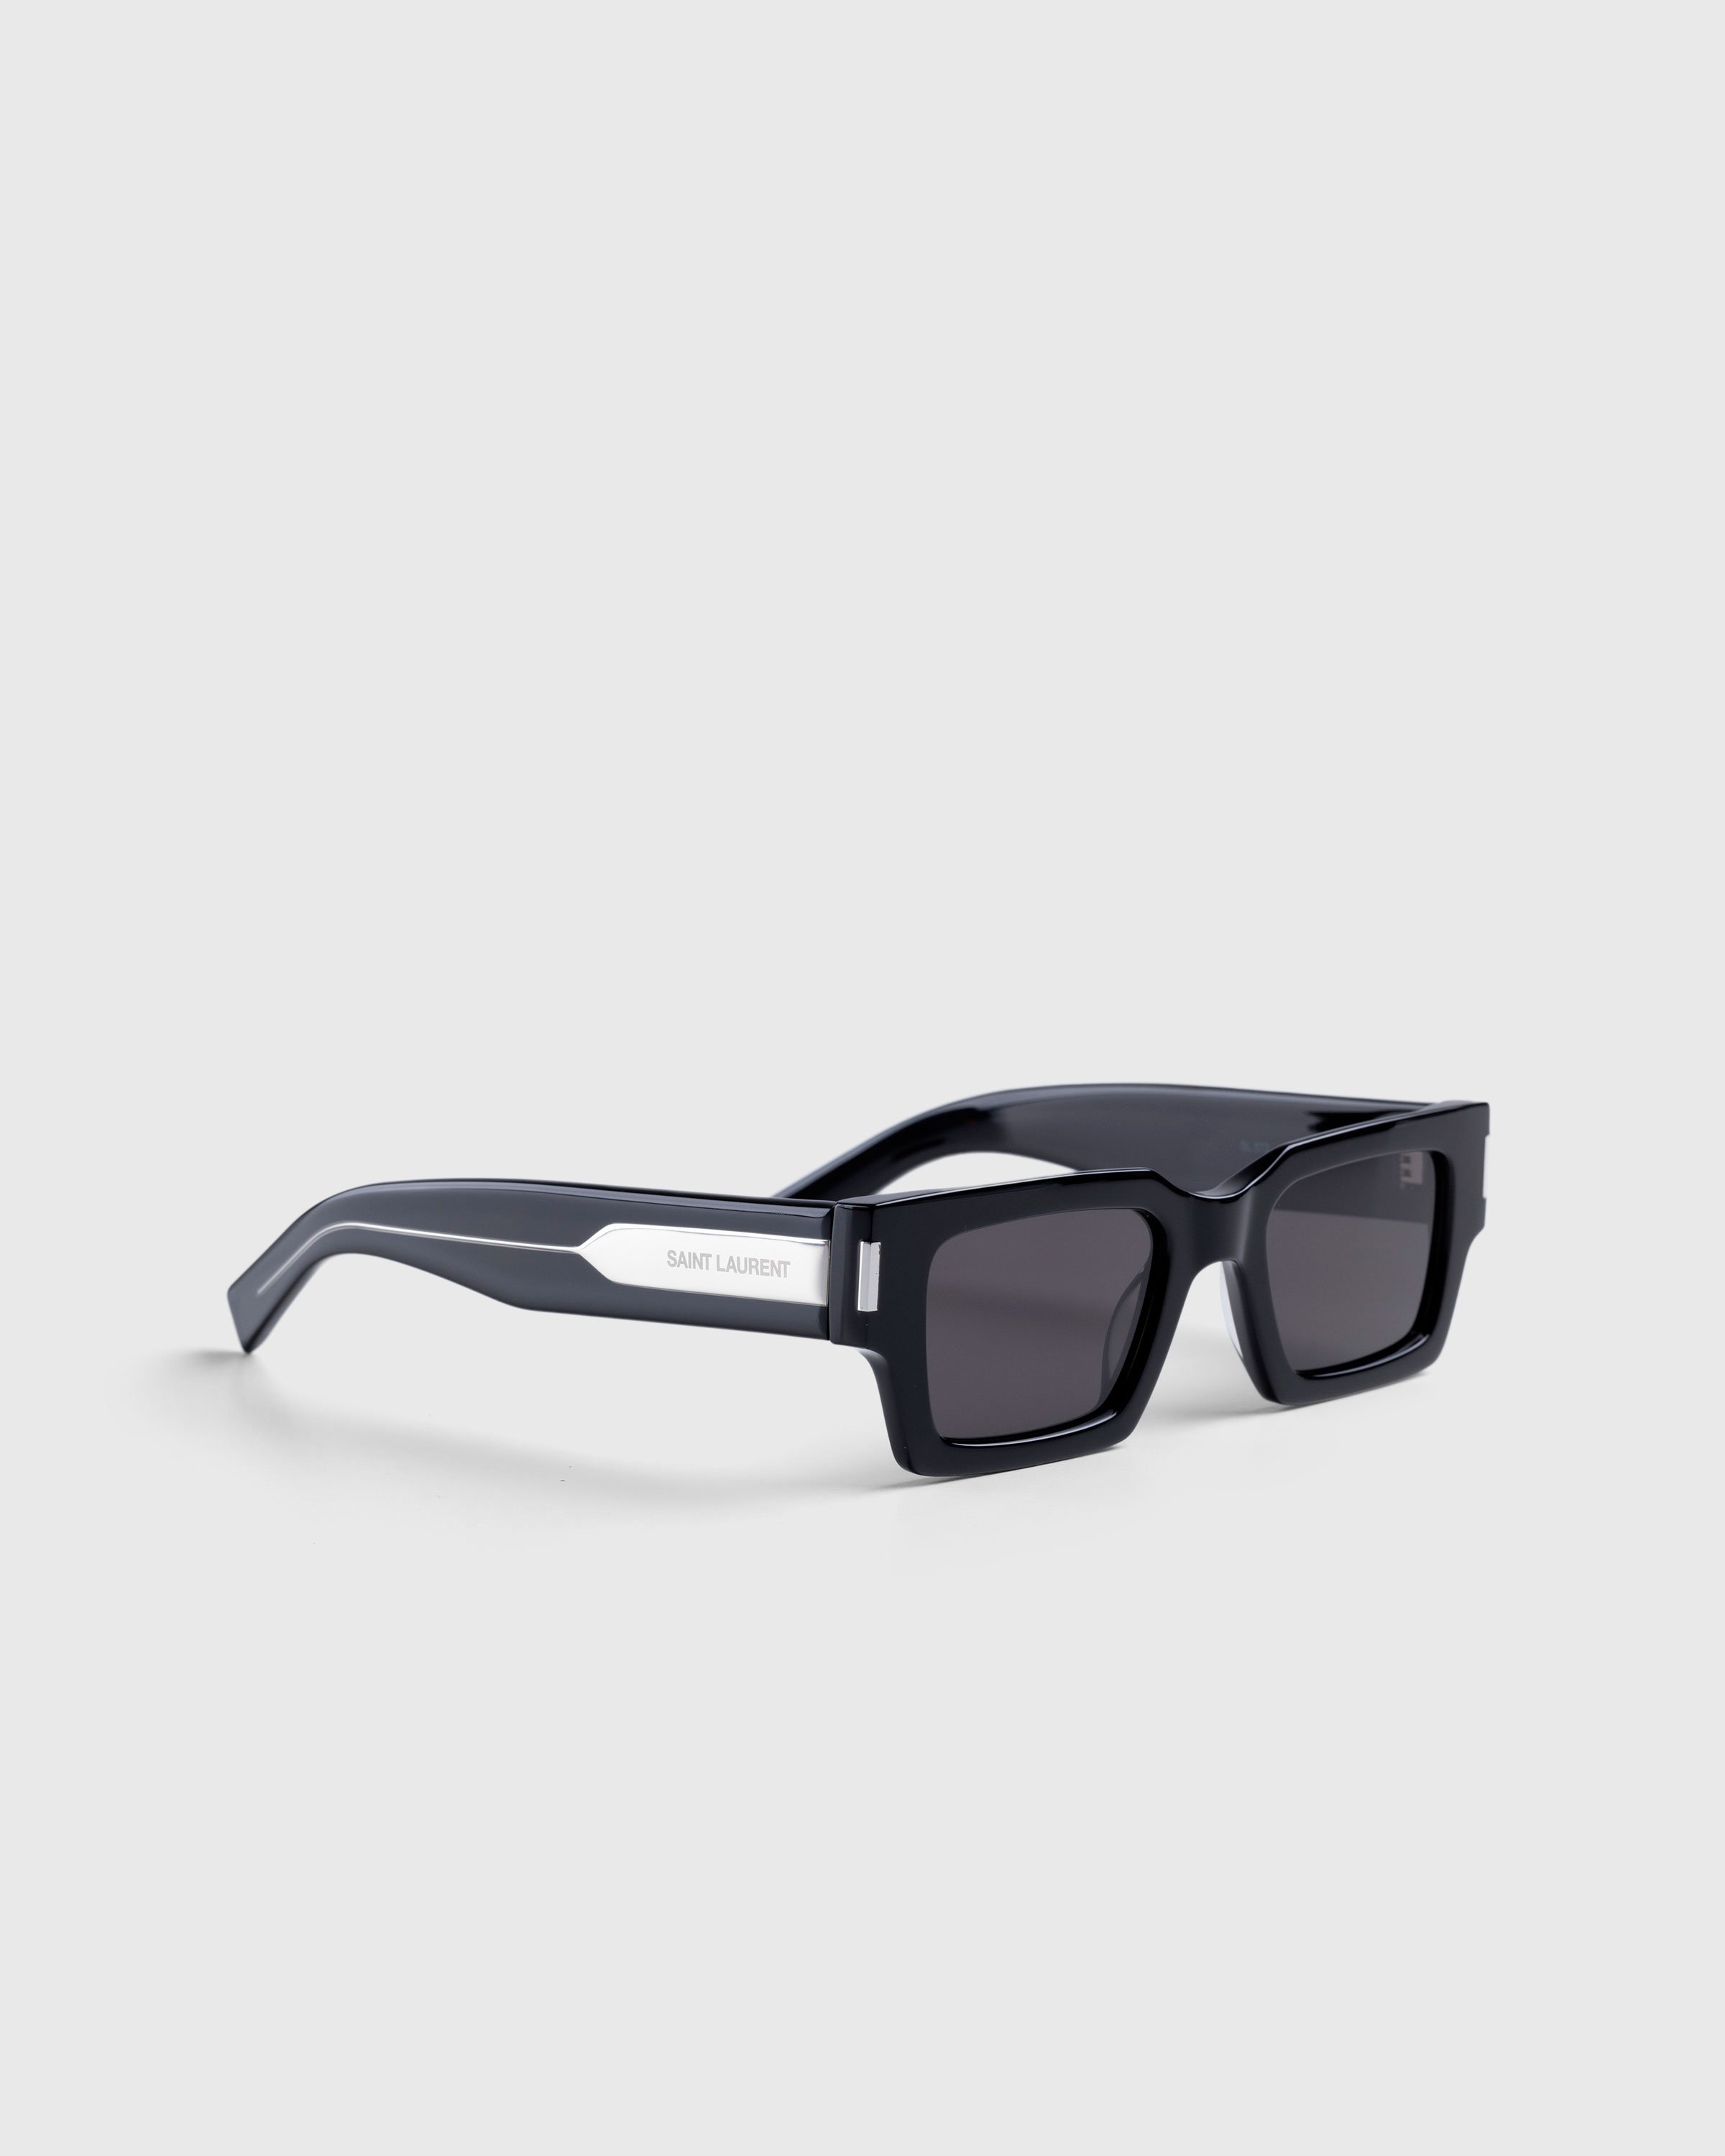 Saint Laurent - SL 572 Square Frame Sunglasses Black/Crystal - Accessories - Multi - Image 2